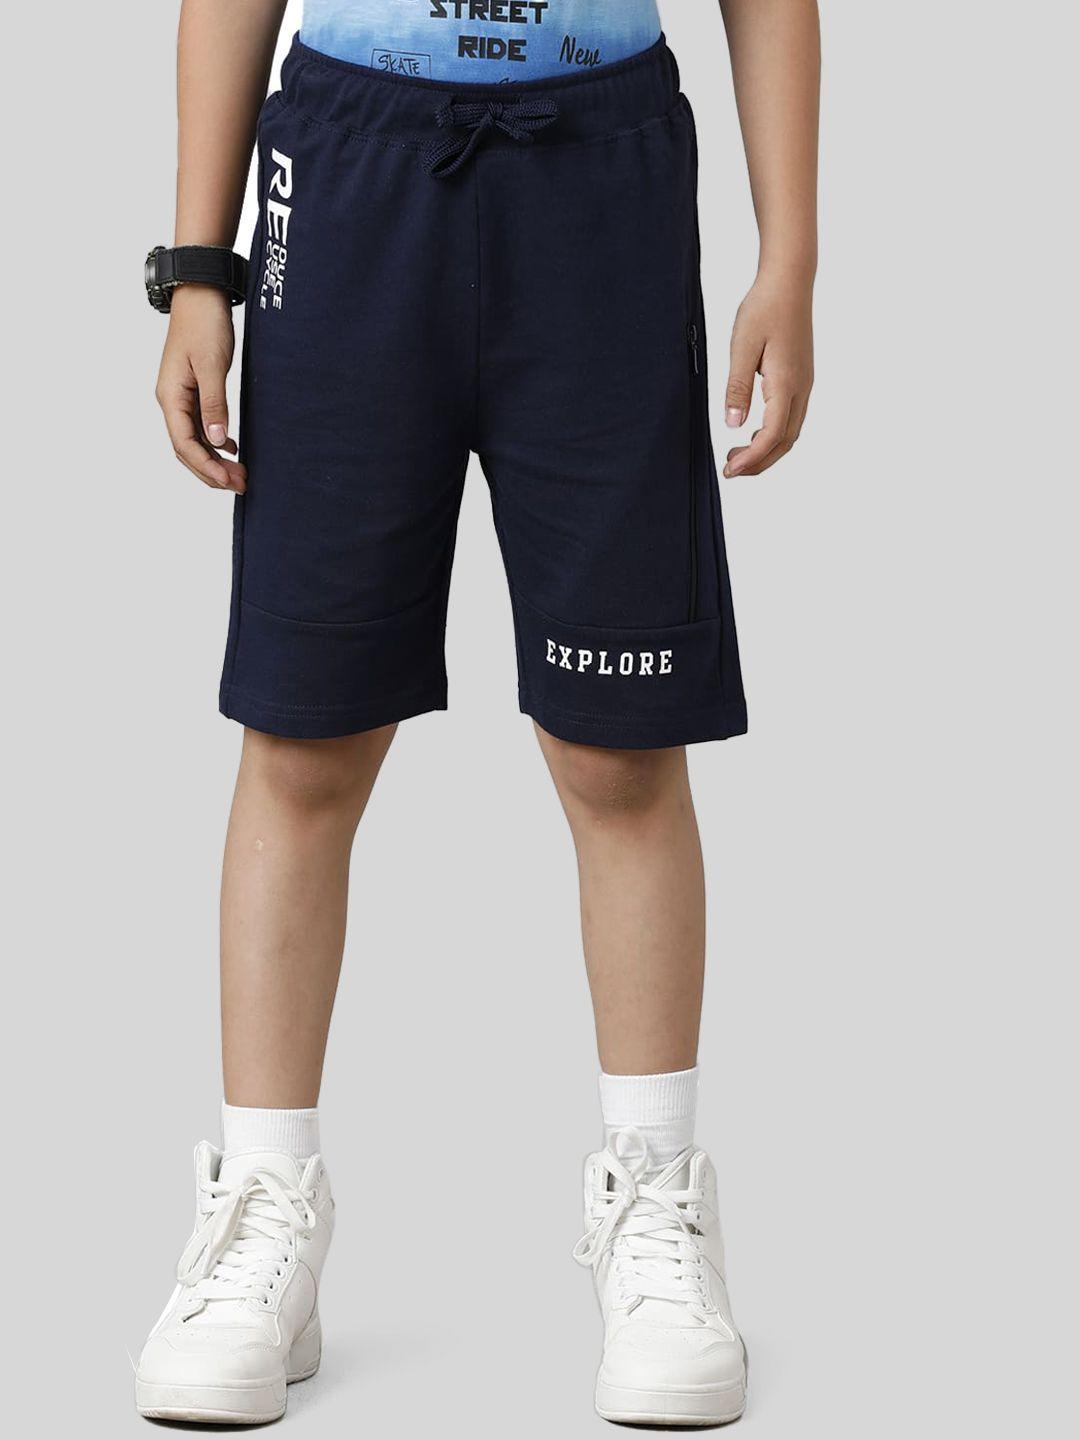 under fourteen only boys navy blue shorts